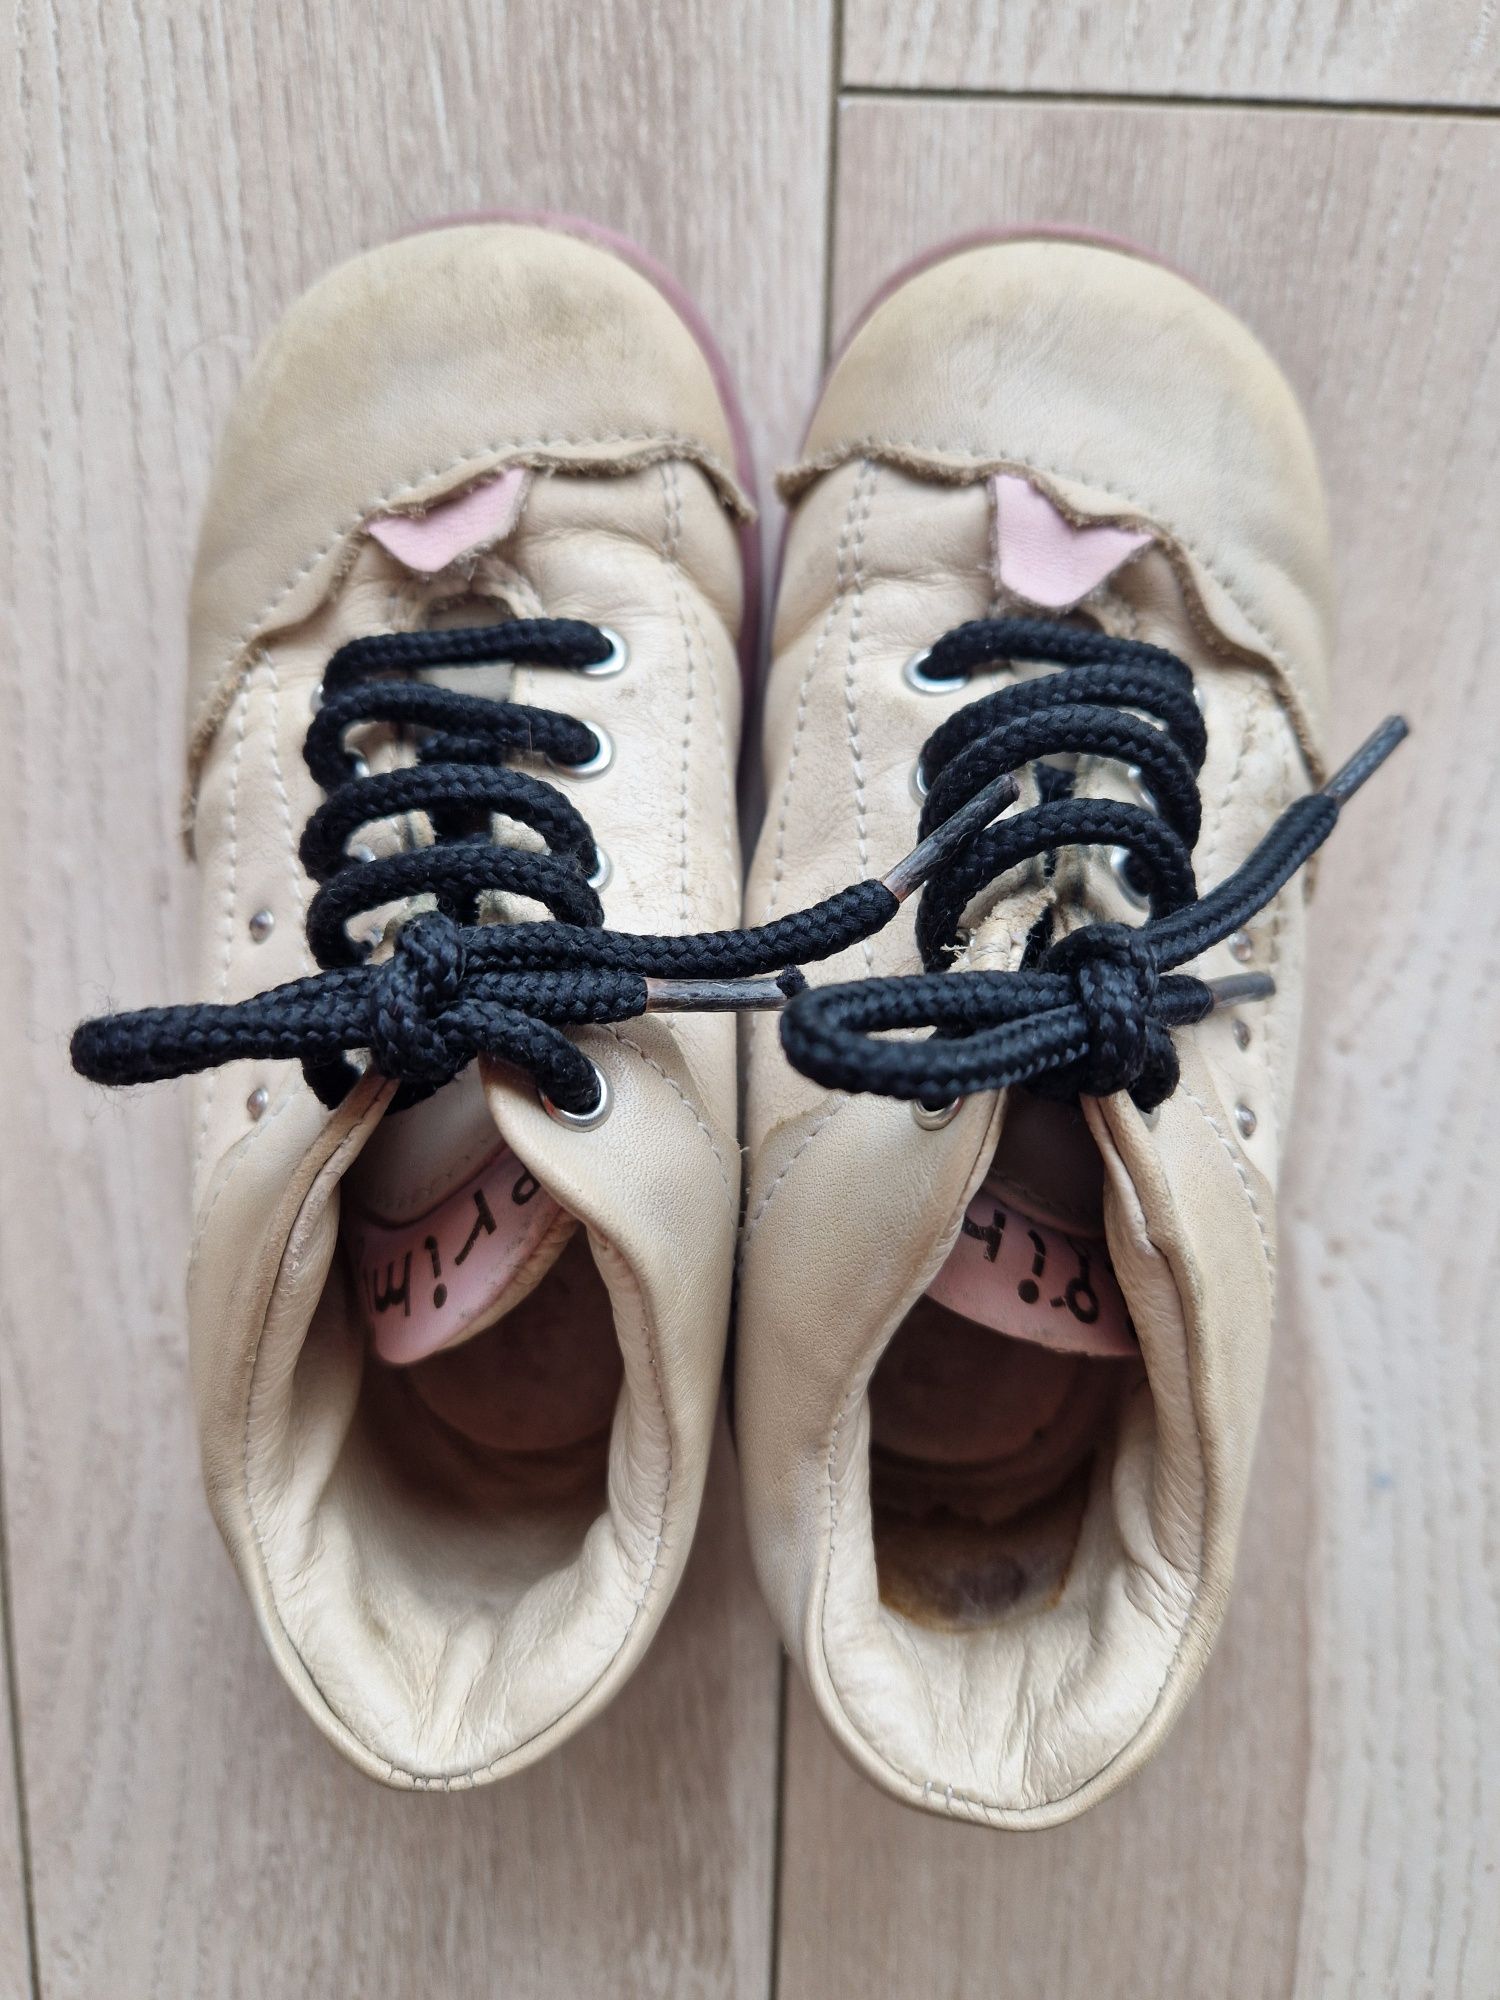 Pantofi fete Primigi, piele naturala, marimea 23 EU.